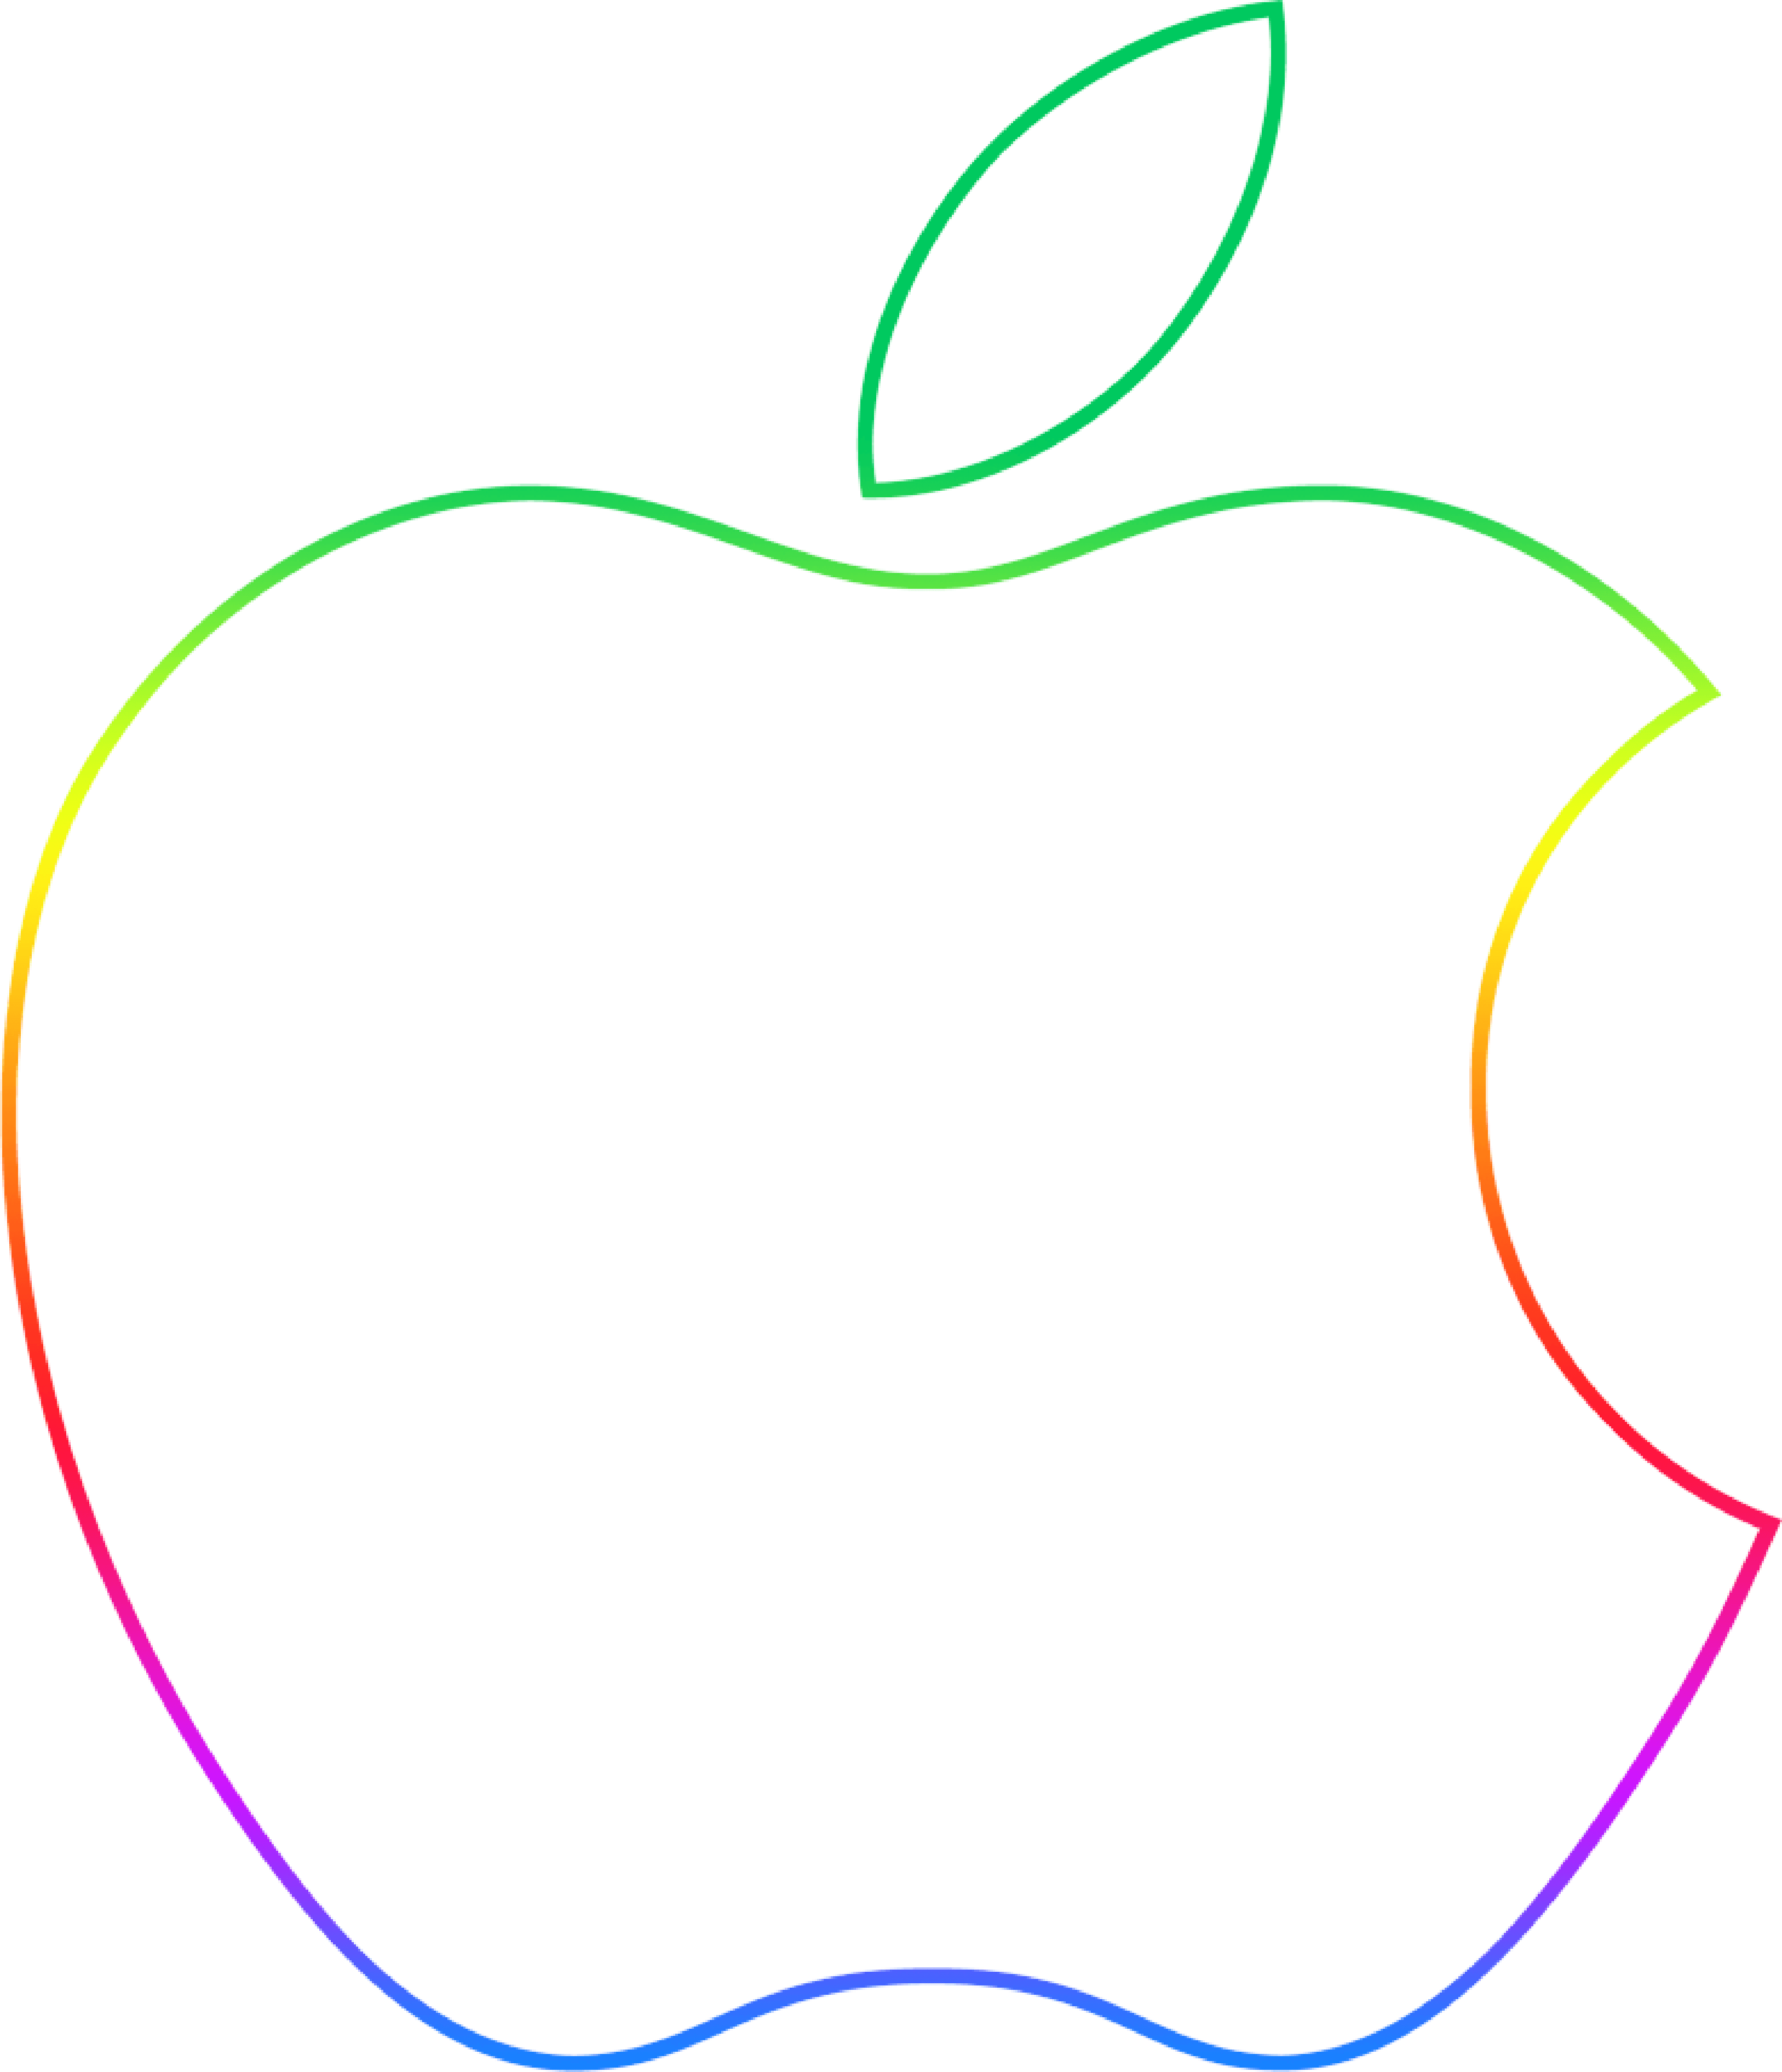 Transparent Apple Logo - Apple logo graphic black and white download transparent background ...